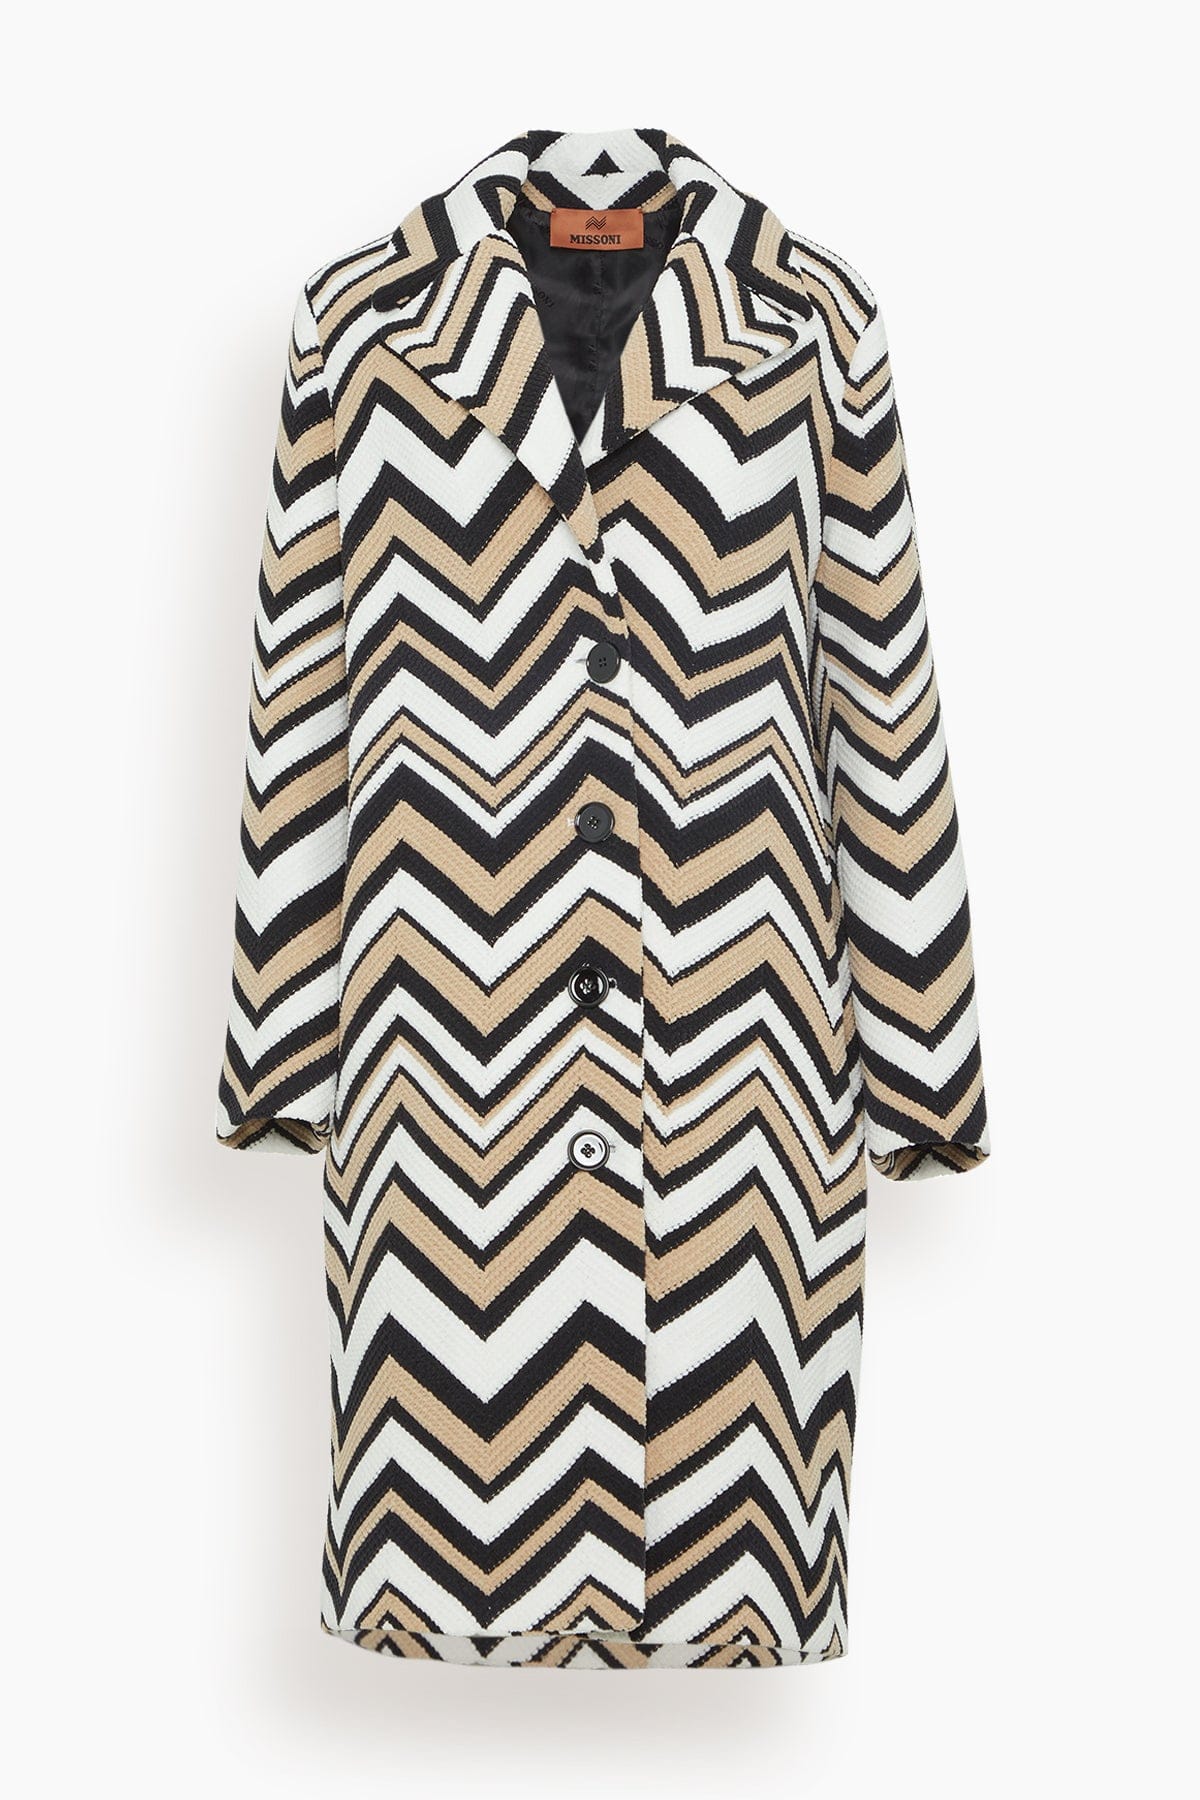 Missoni Coats Coat in Zigzag Beige/White/Black